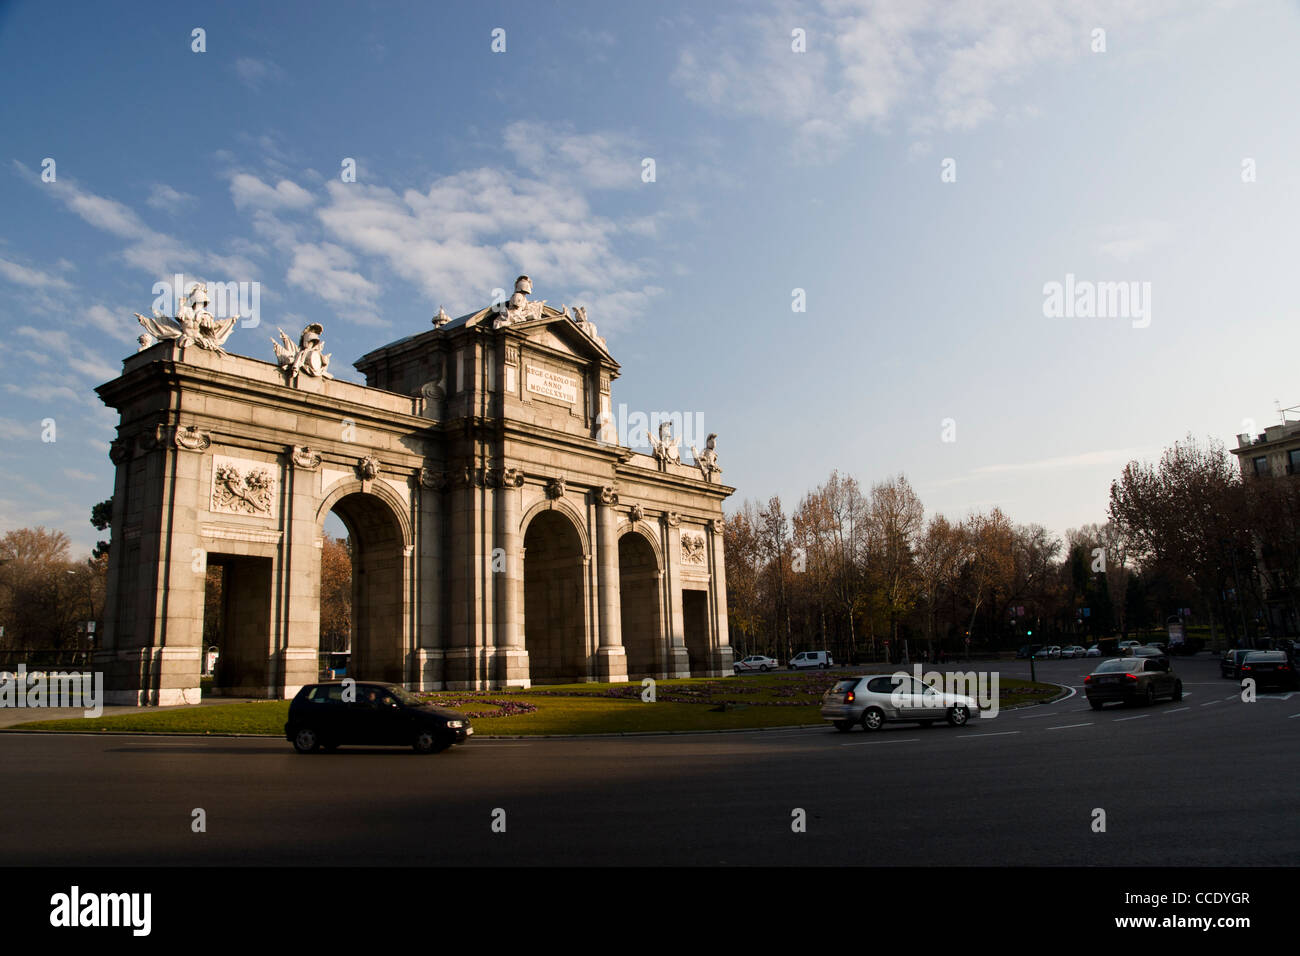 Puerta de Alcala, Plaza de la Independencia, Madrid, Spain. Stock Photo